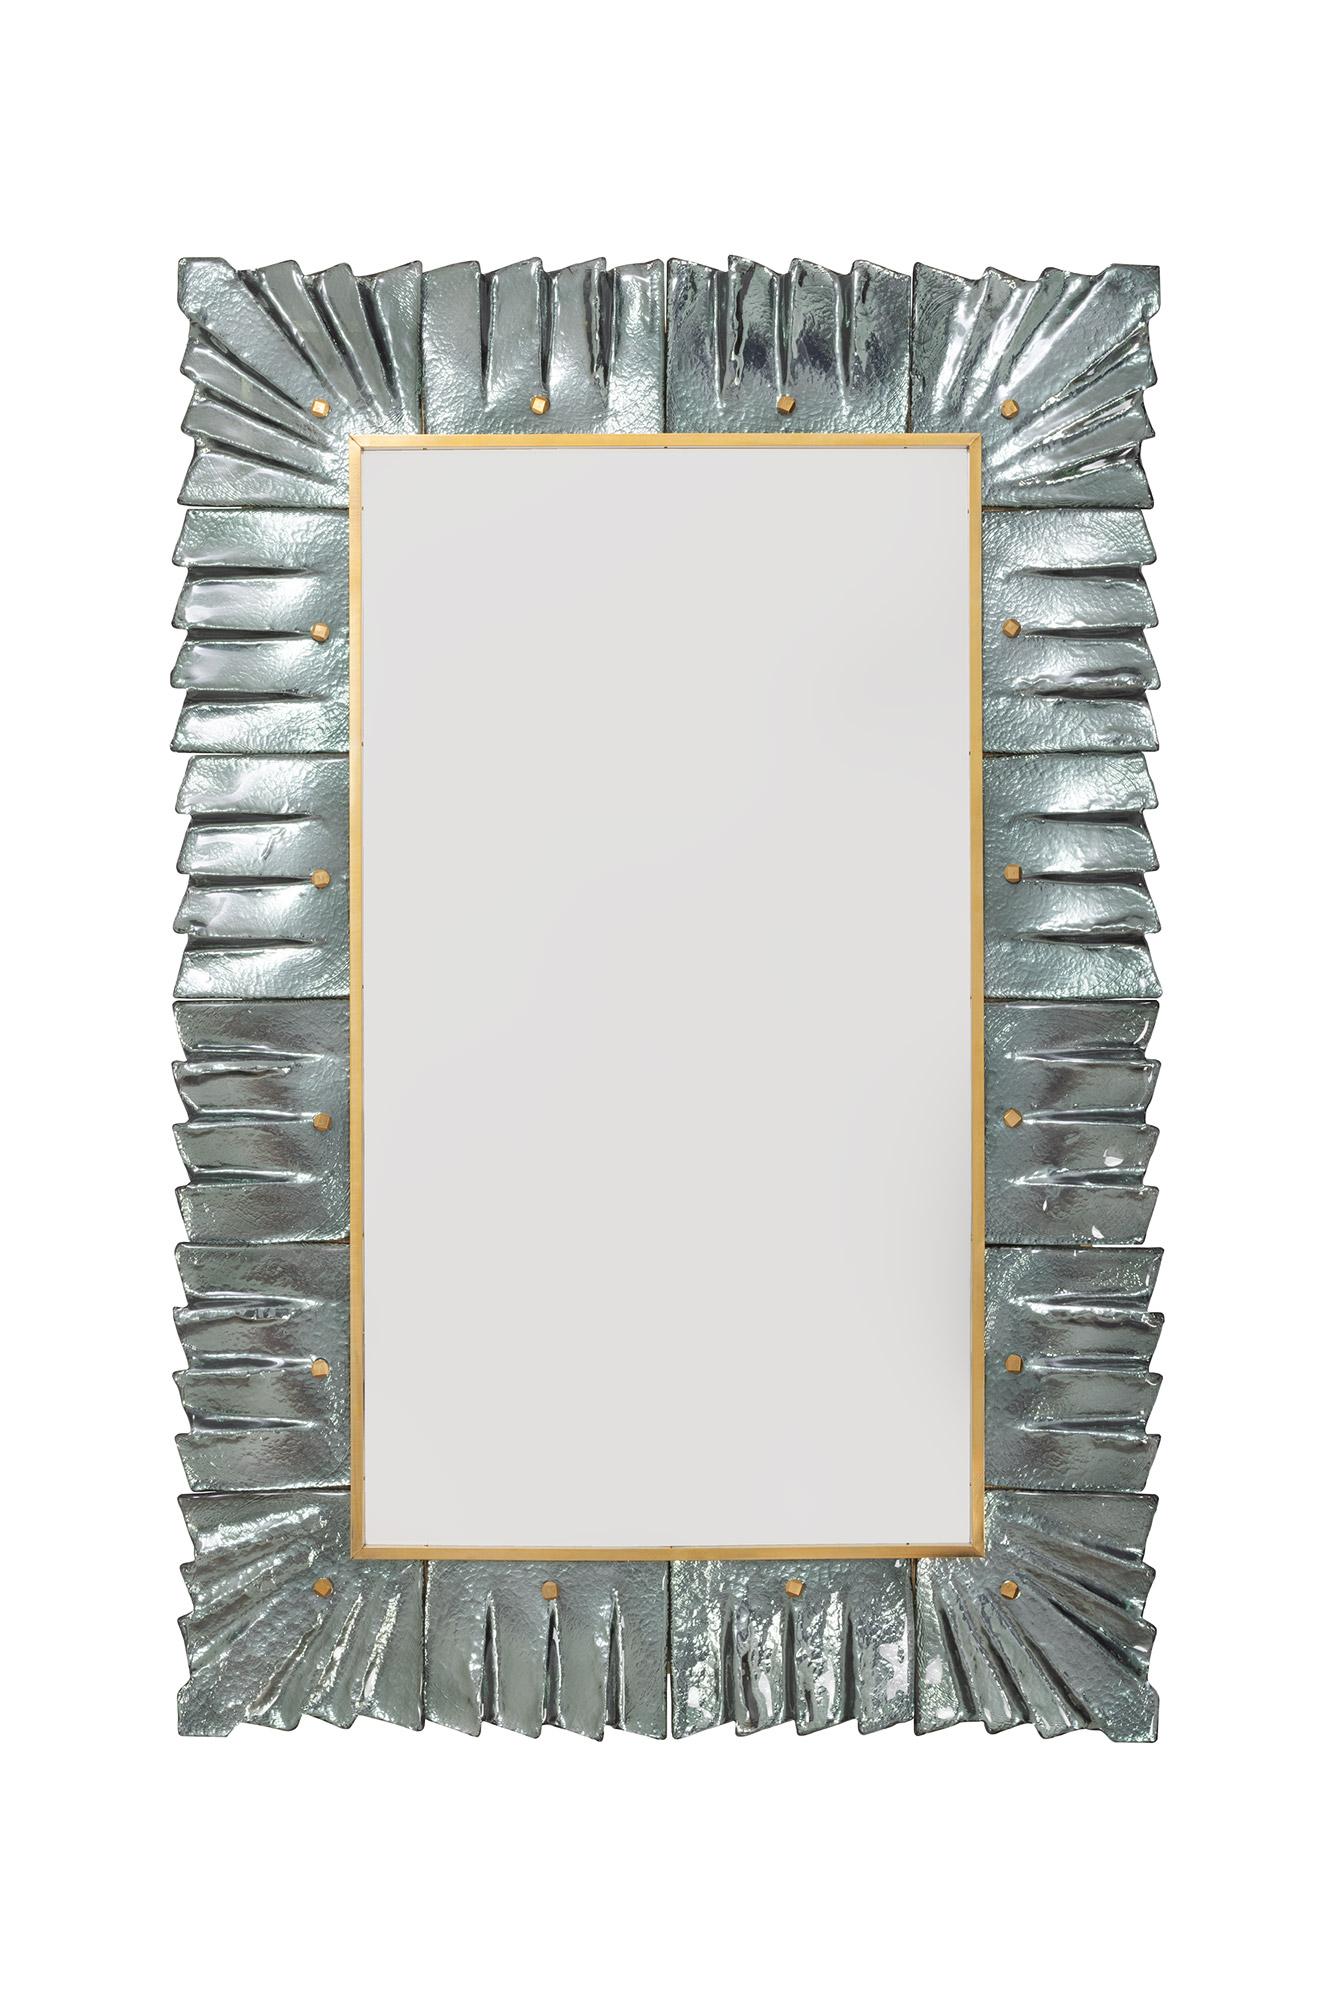 seaglass mirror